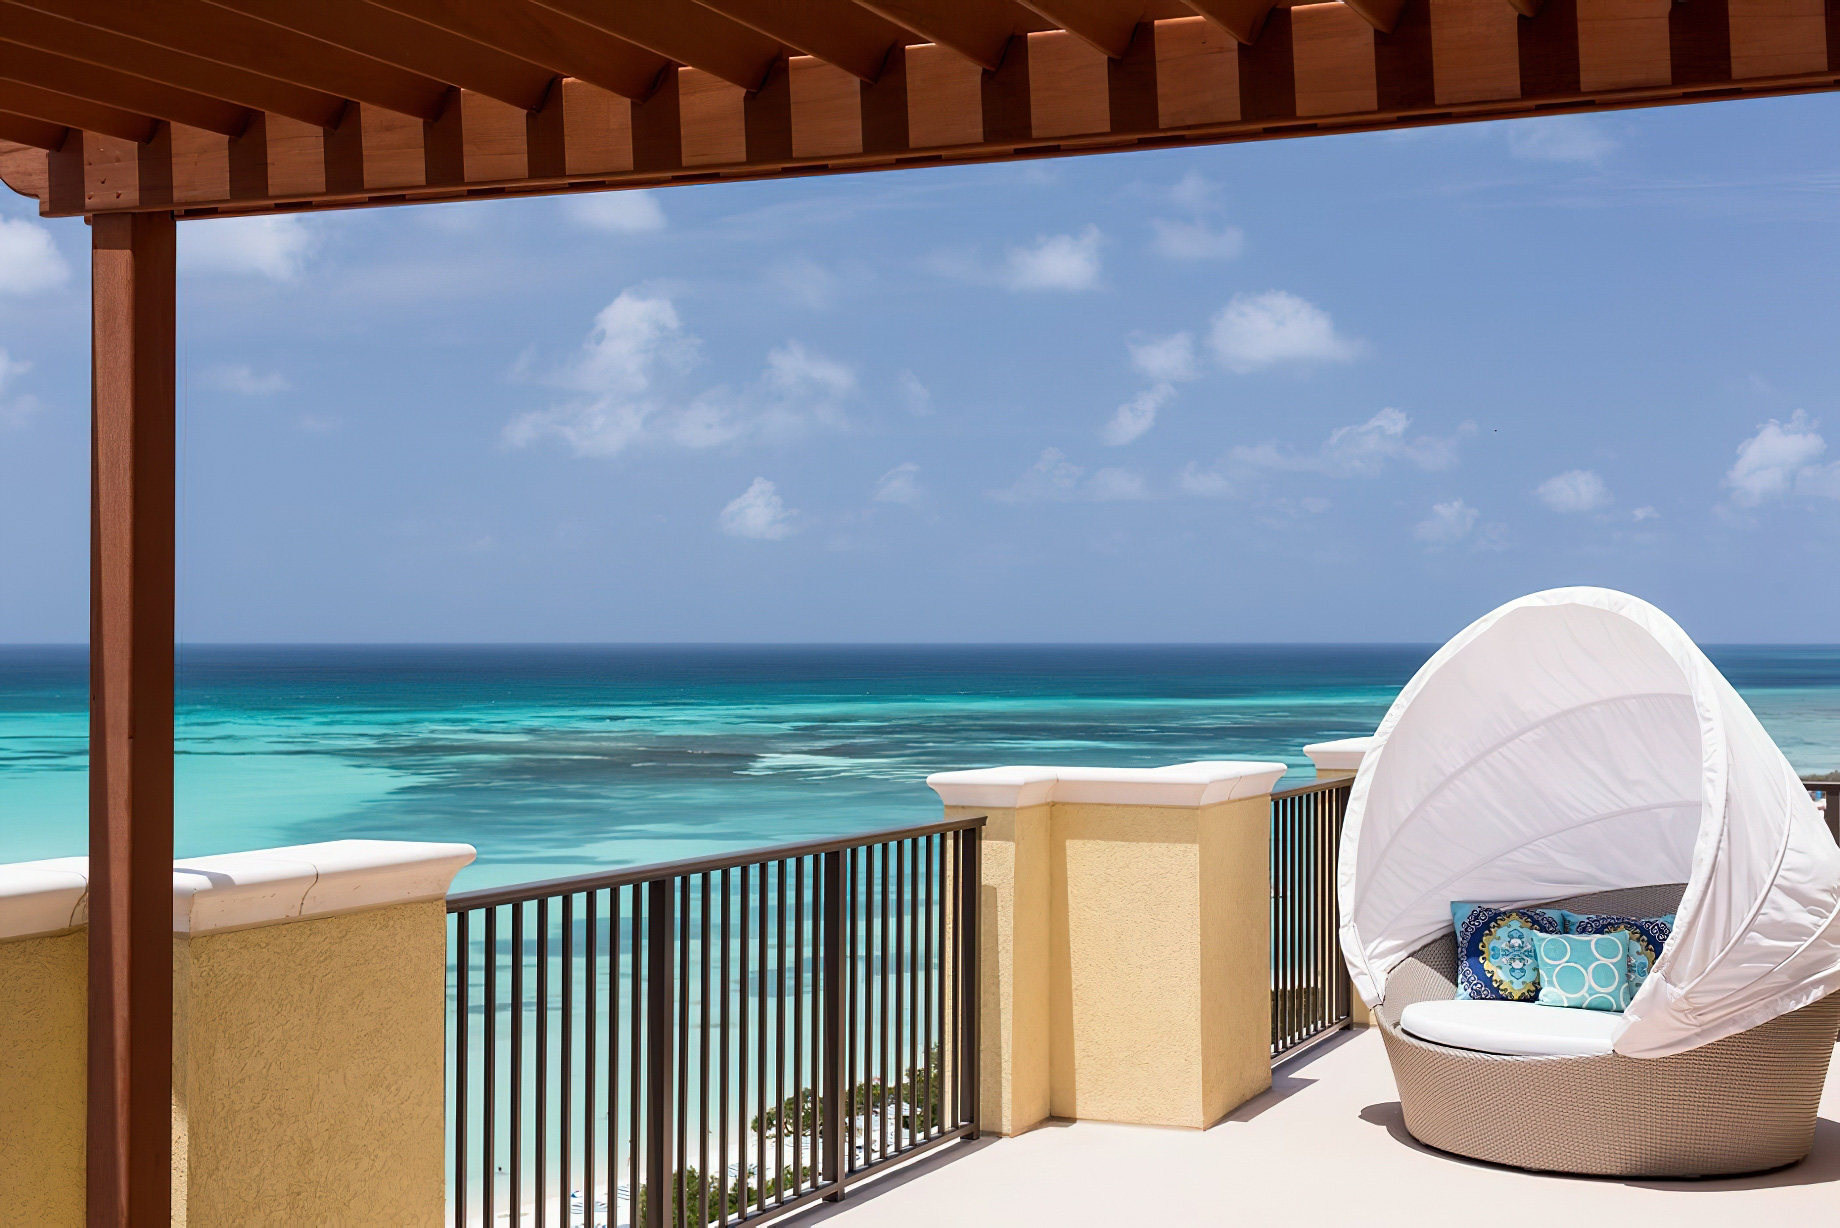 The Ritz-Carlton, Aruba Resort – Palm Beach, Aruba – Ritz-Carlton Suite Deck